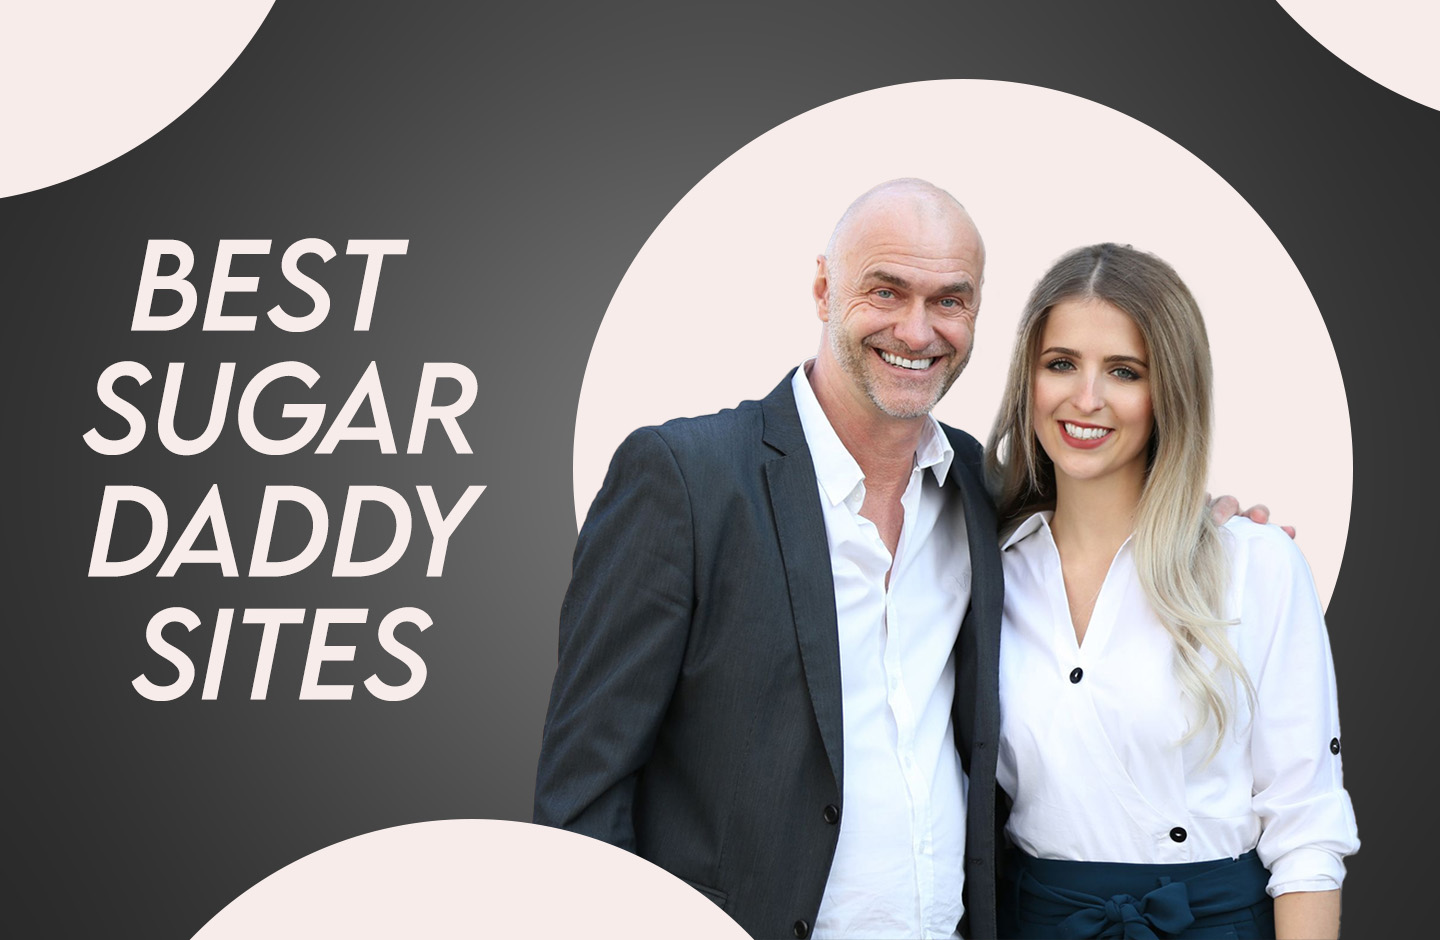 sugar daddy website, sugar daddies dating sites